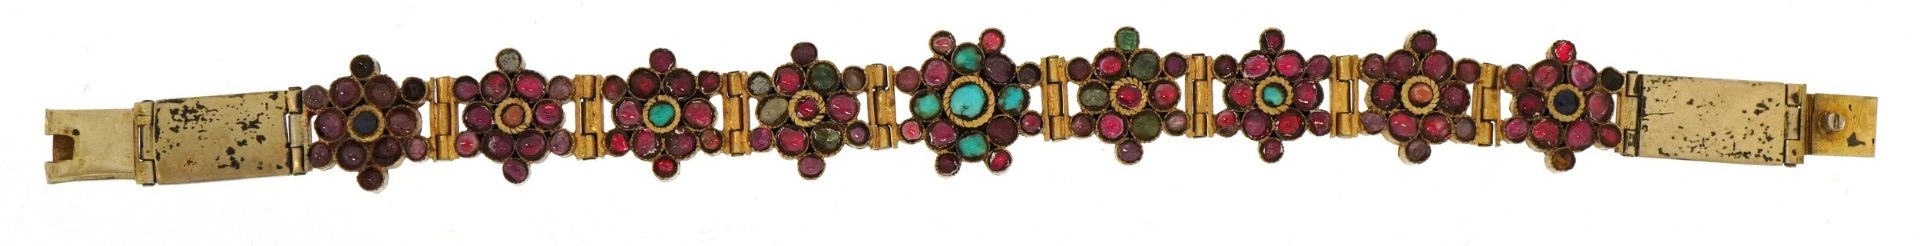 Continental gilt metal flower head multigem bracelet, set with colouful stones including rubies, - Image 2 of 3